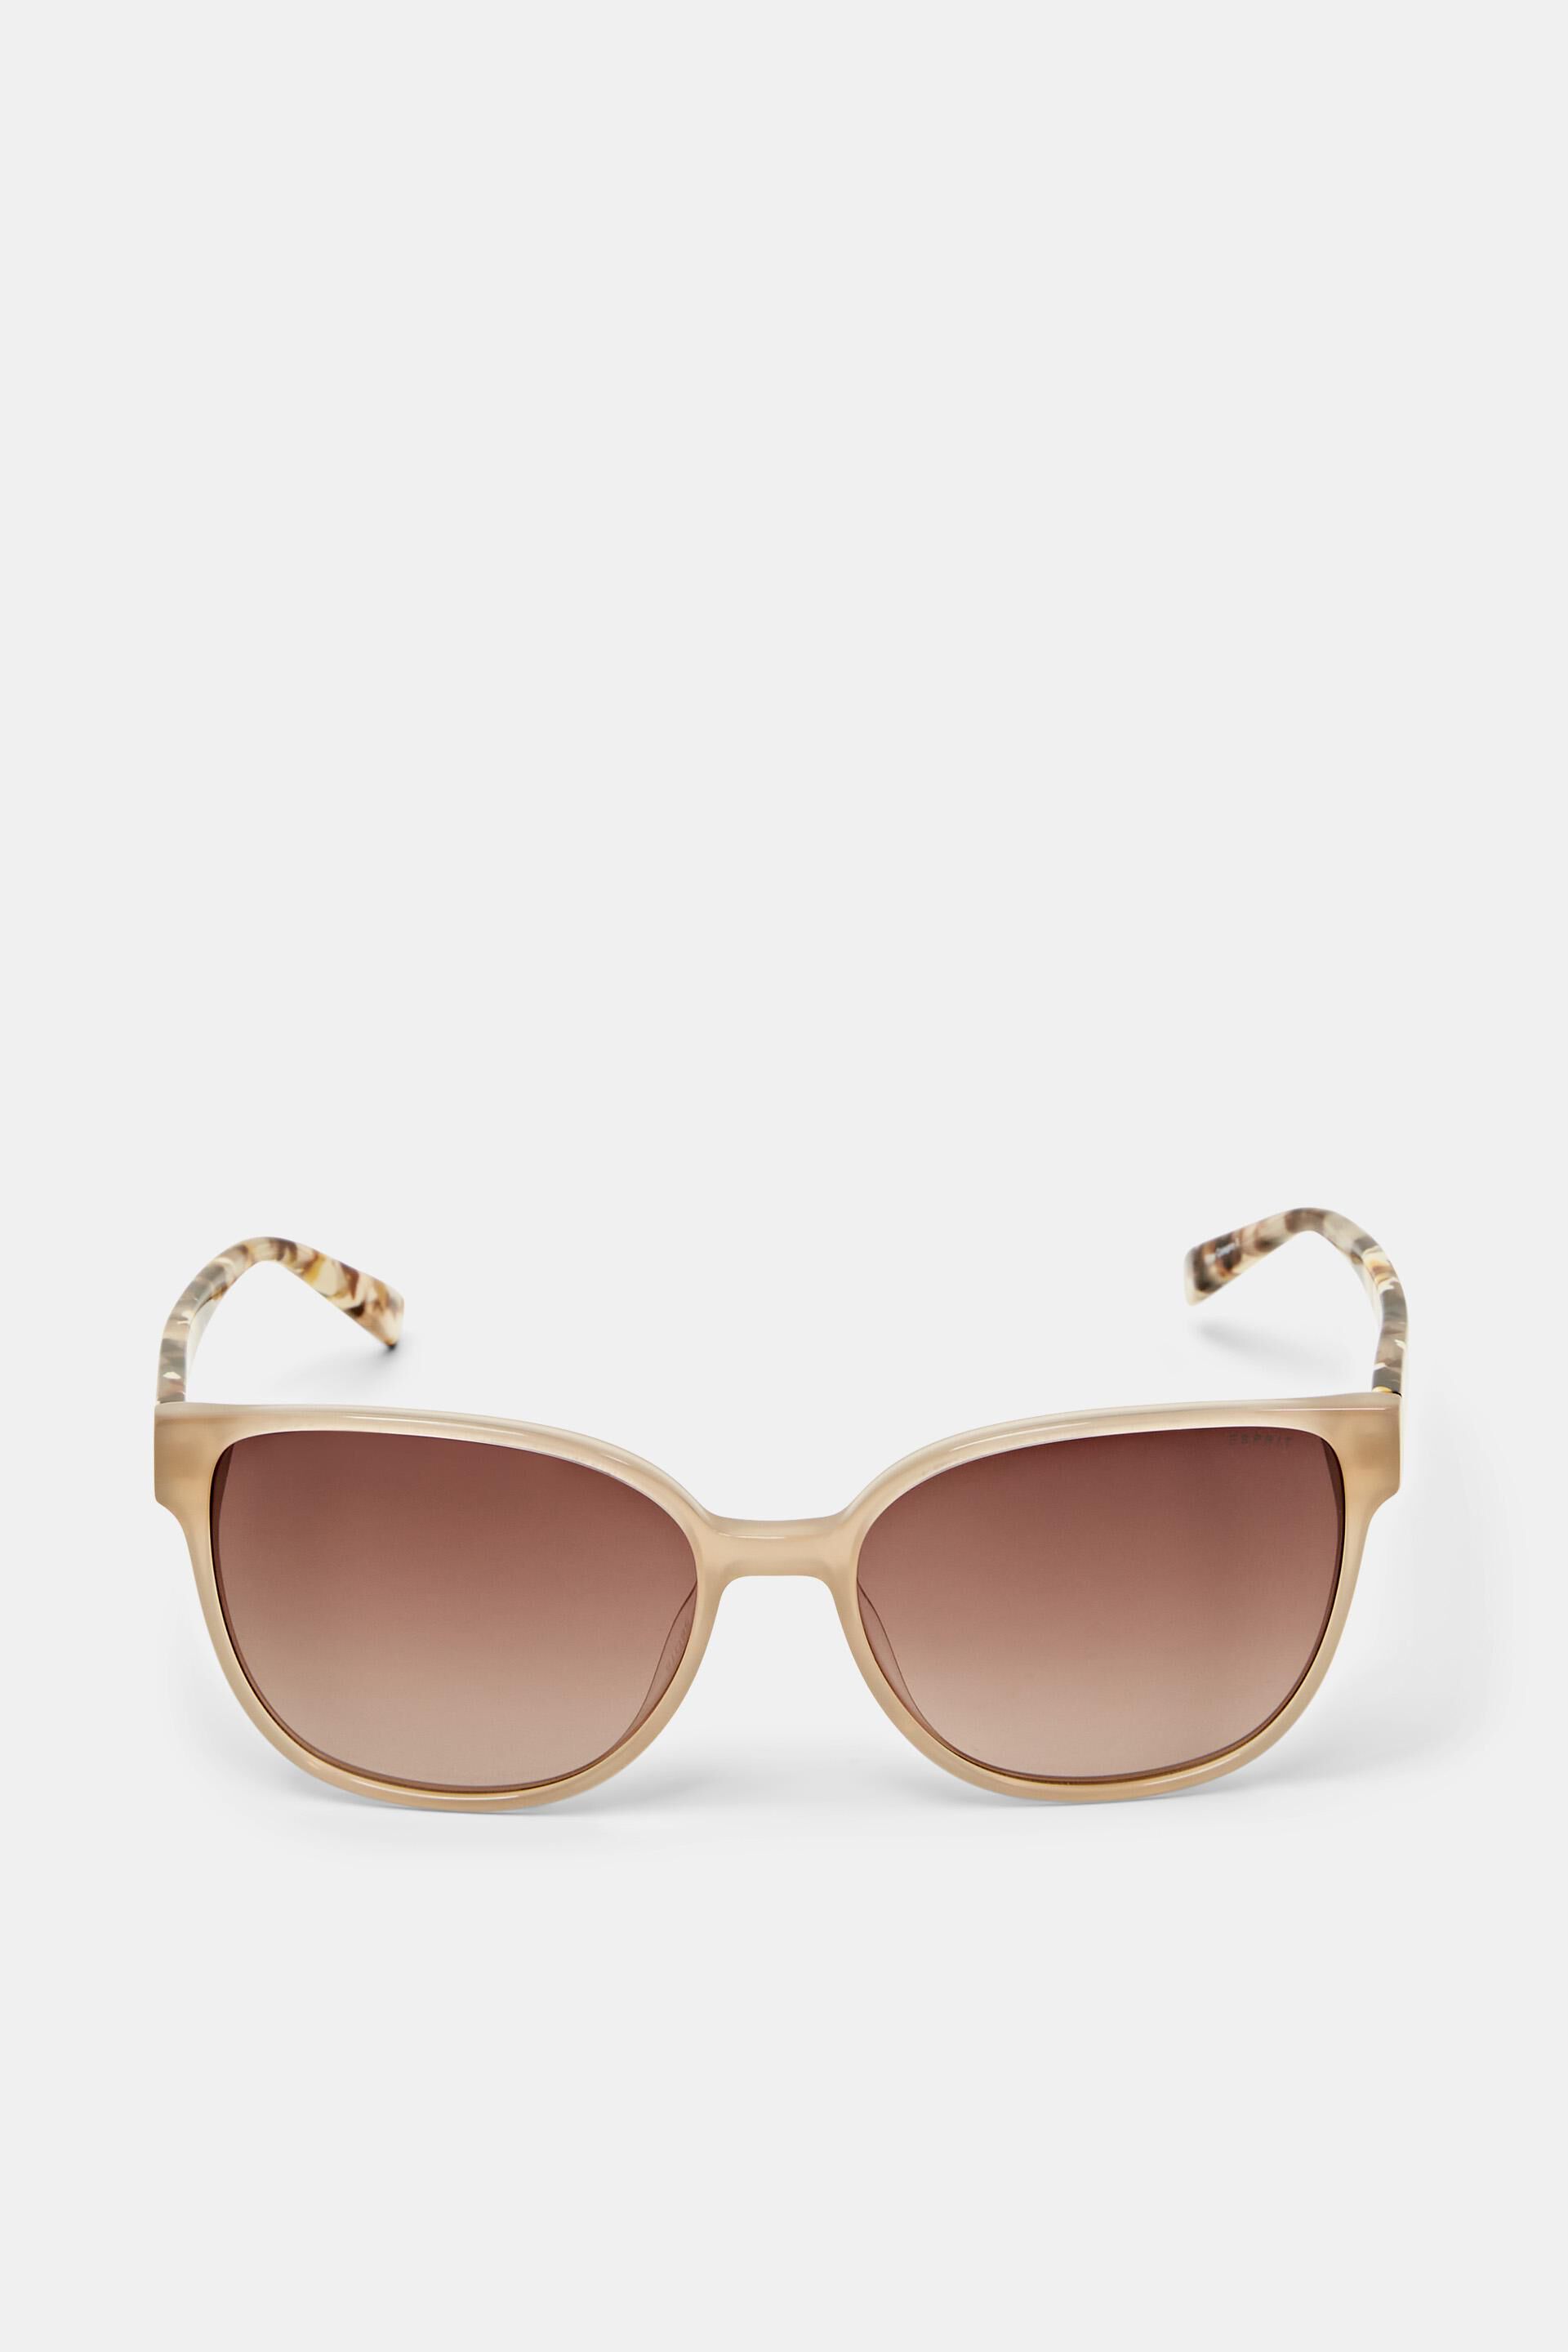 Esprit Square framed sunglasses